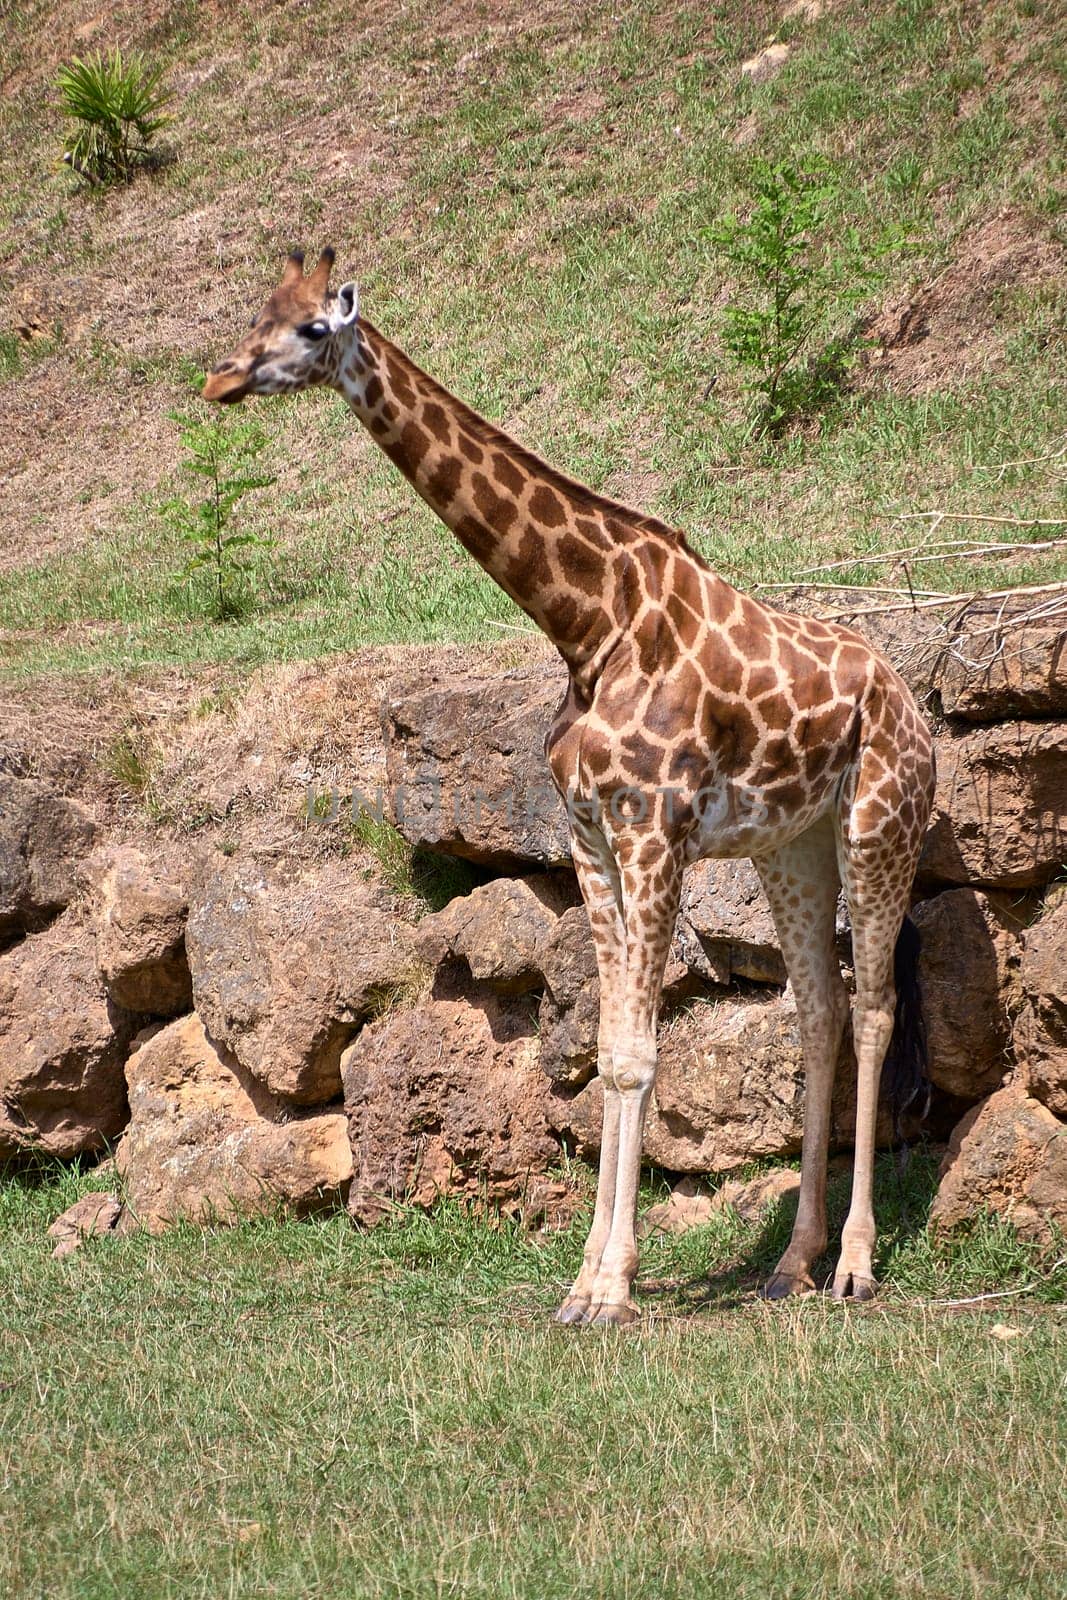 A lone giraffe leaning on large rocks by raul_ruiz